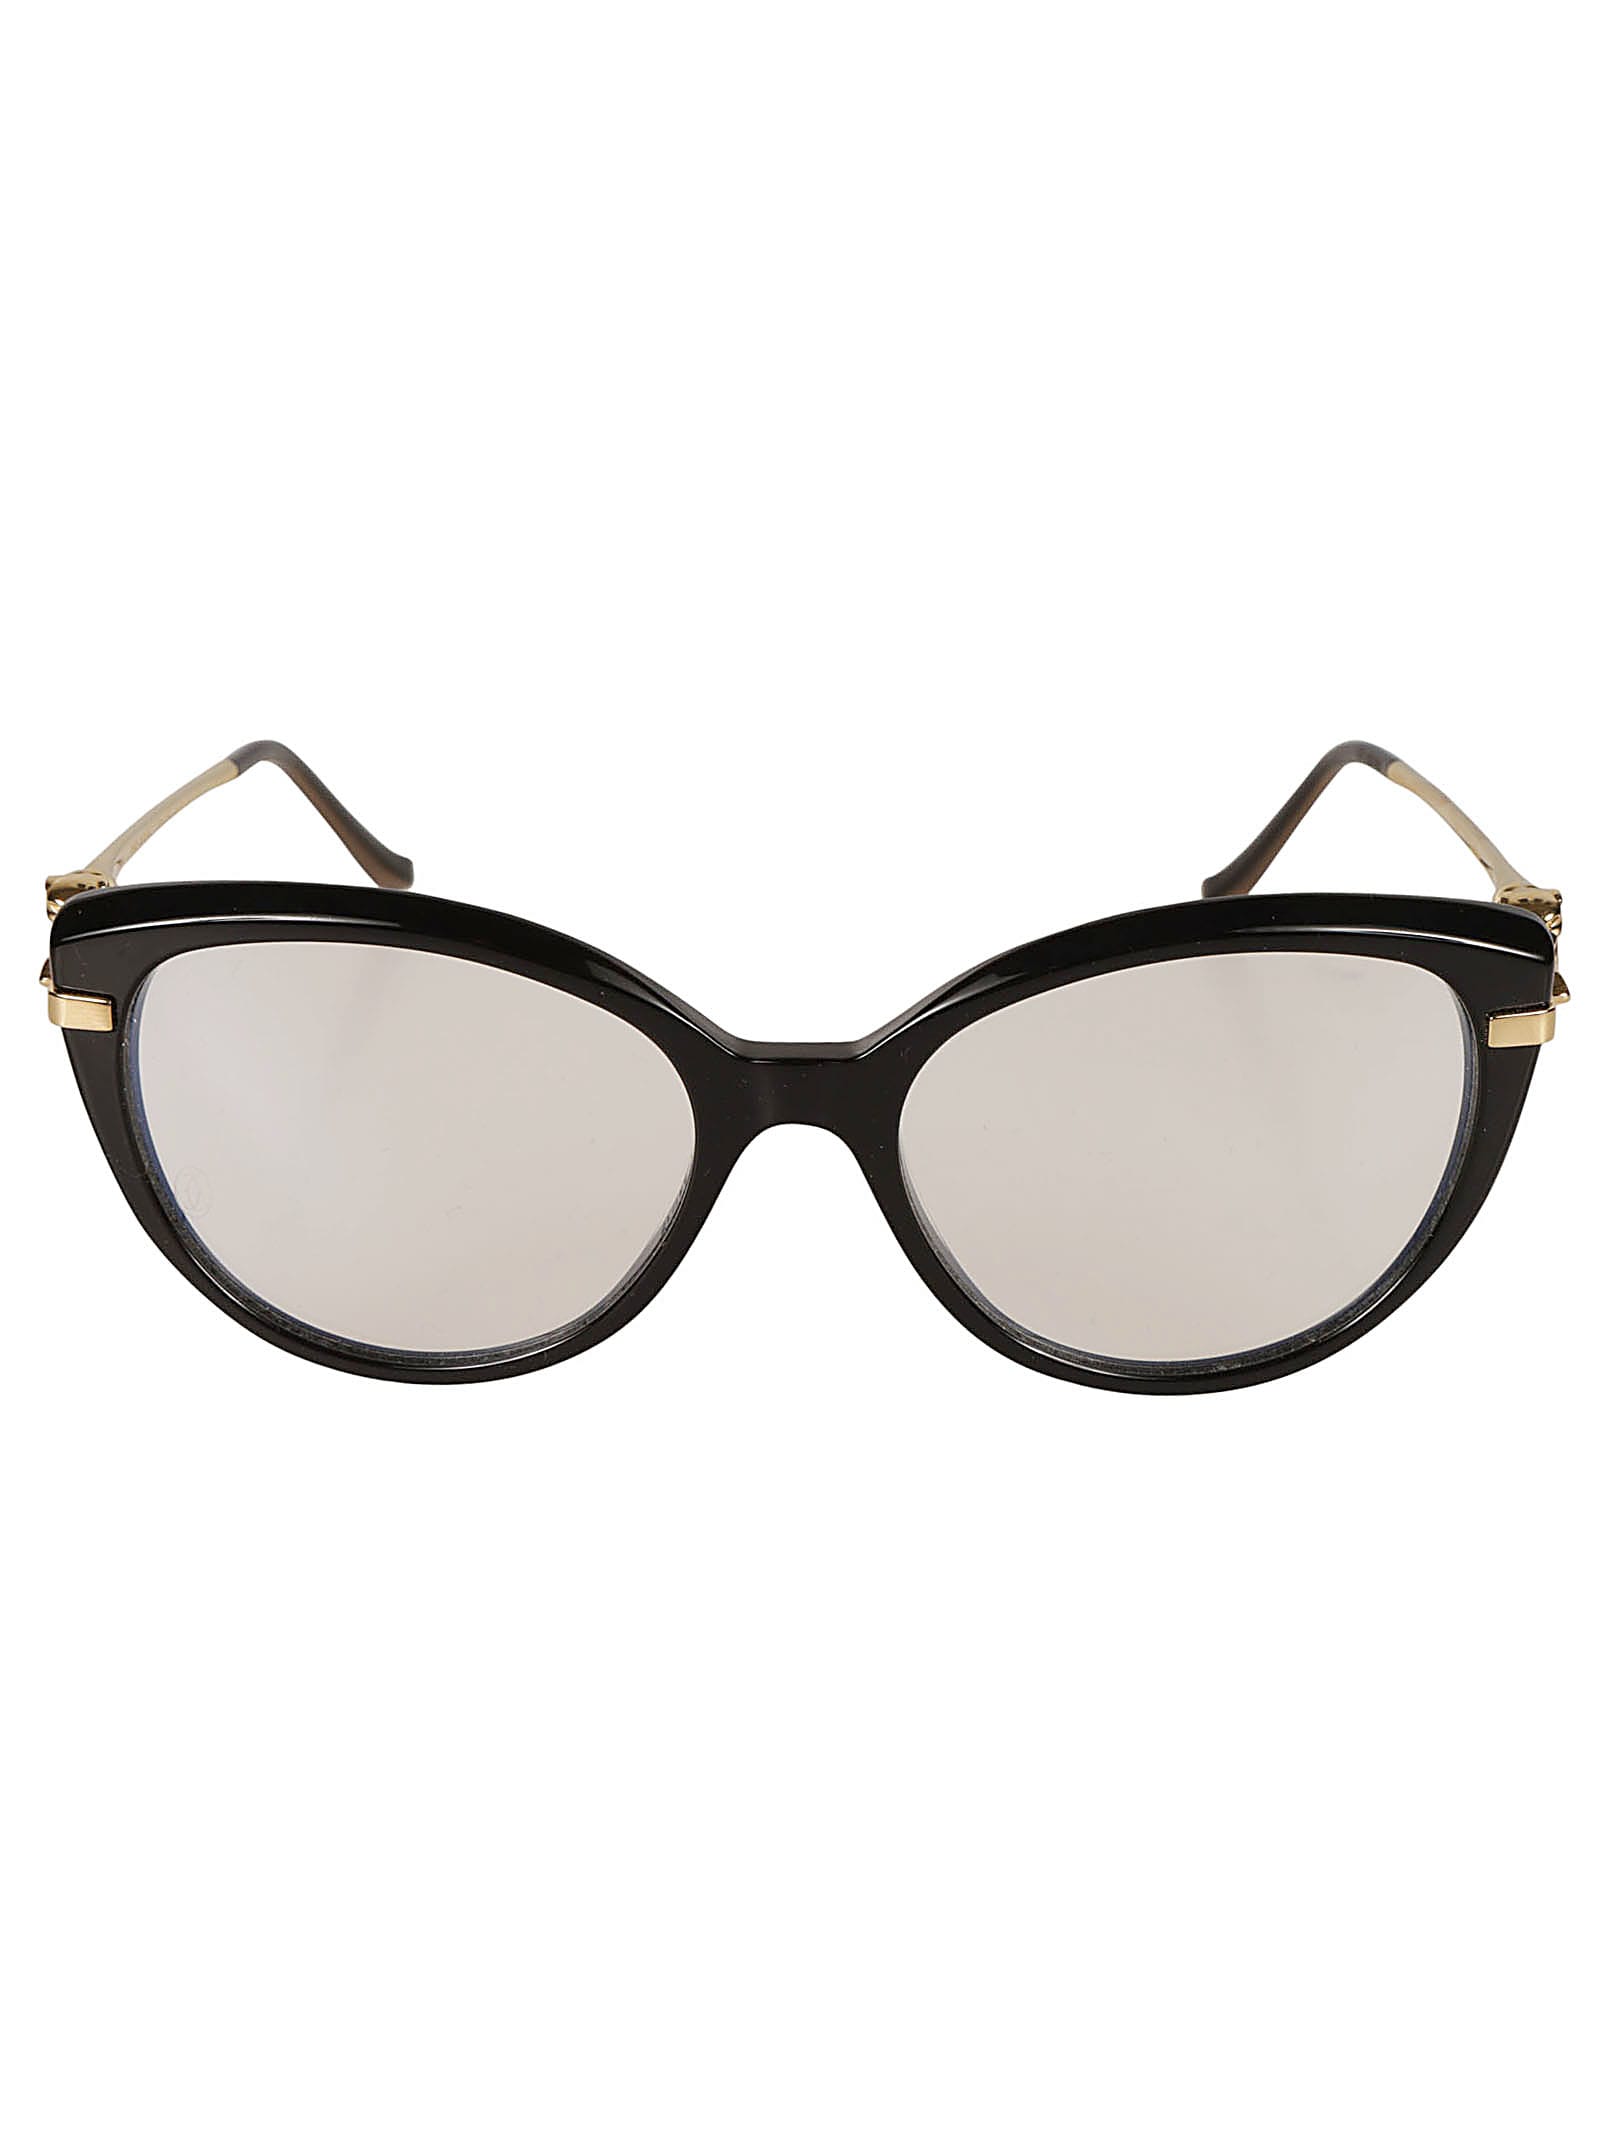 Cartier Round Cat-eye Sunglasses Sunglasses In Black-gold